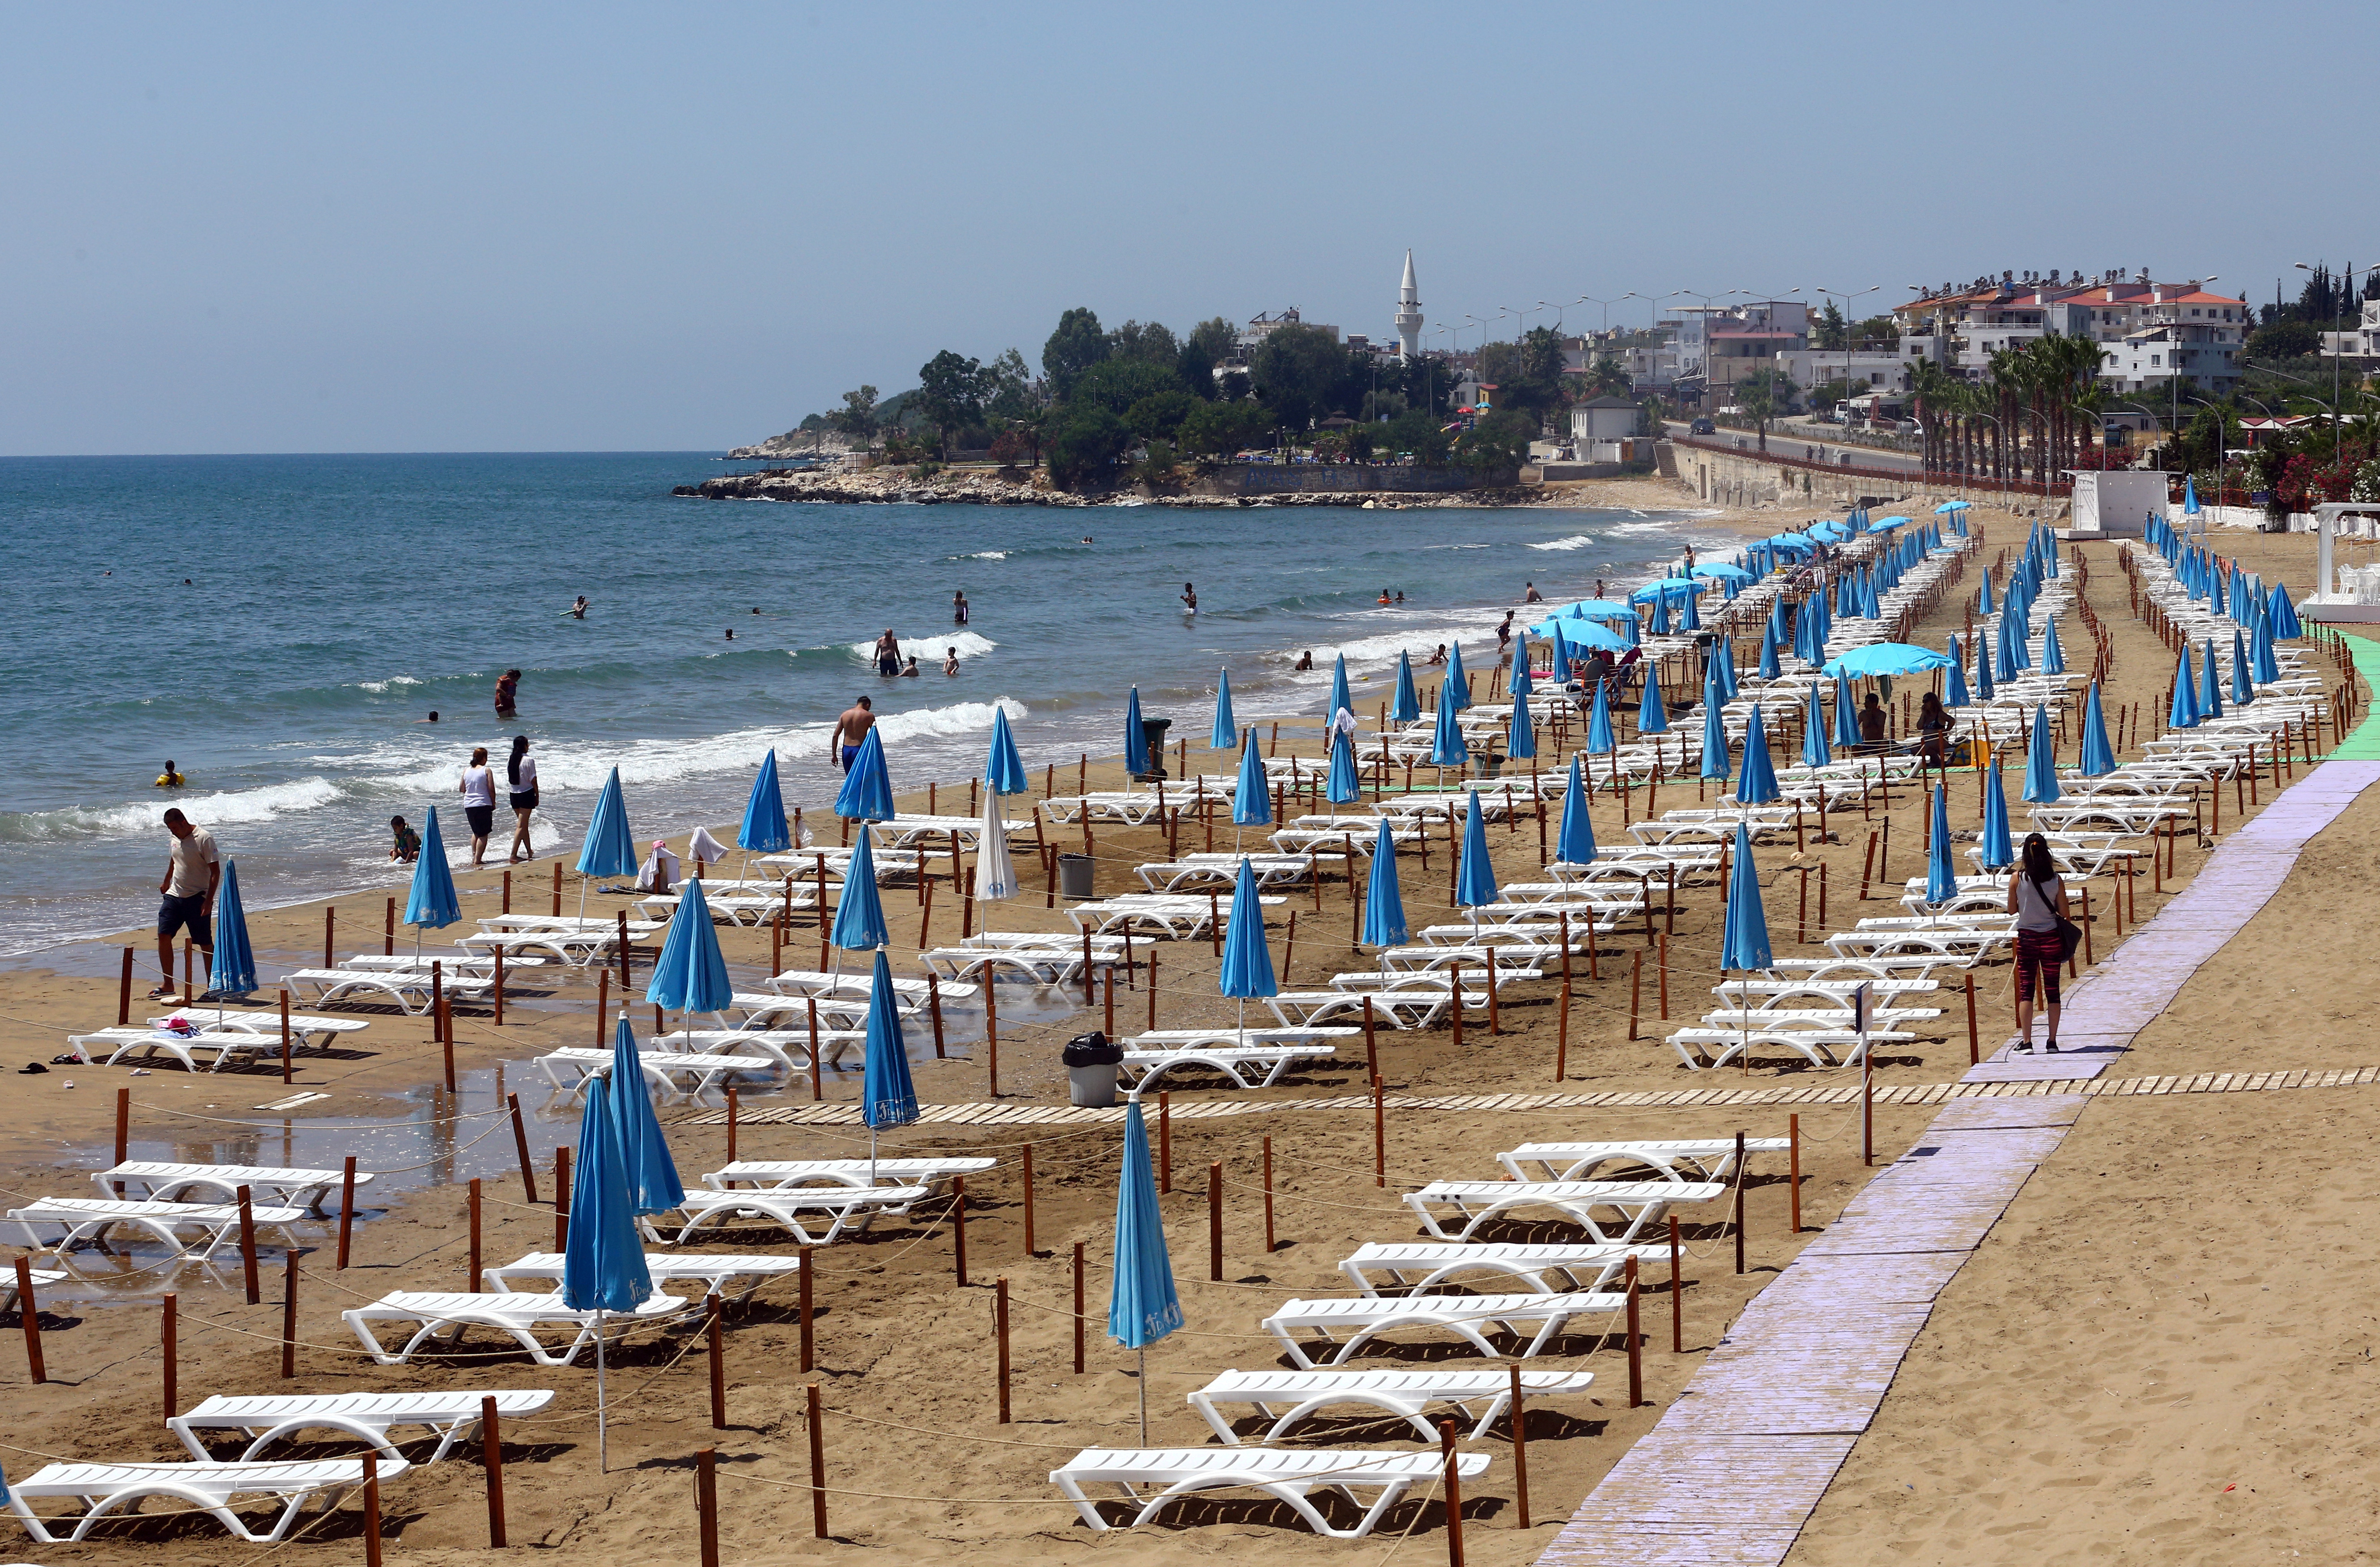 Sunbeds are aligned respecting social distancing on the Yemis Kumu beach near Mersin